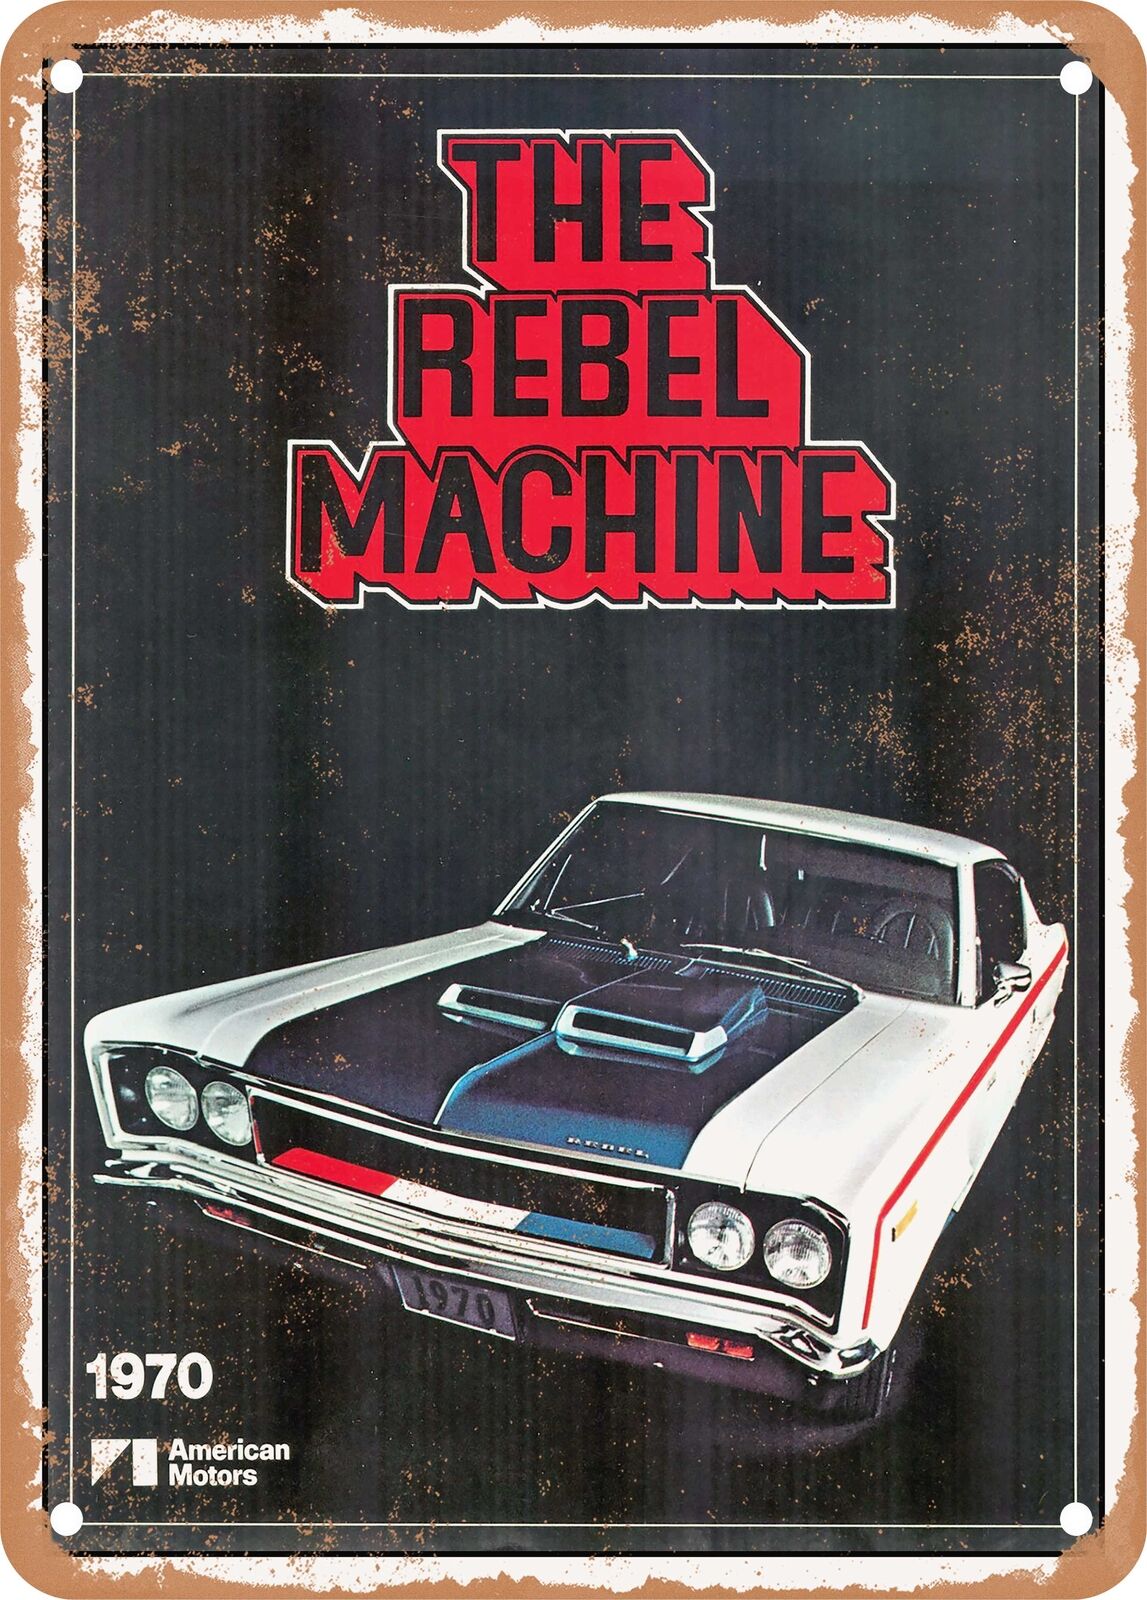 METAL SIGN - 1970 AMC Rebel Machine Vintage Ad